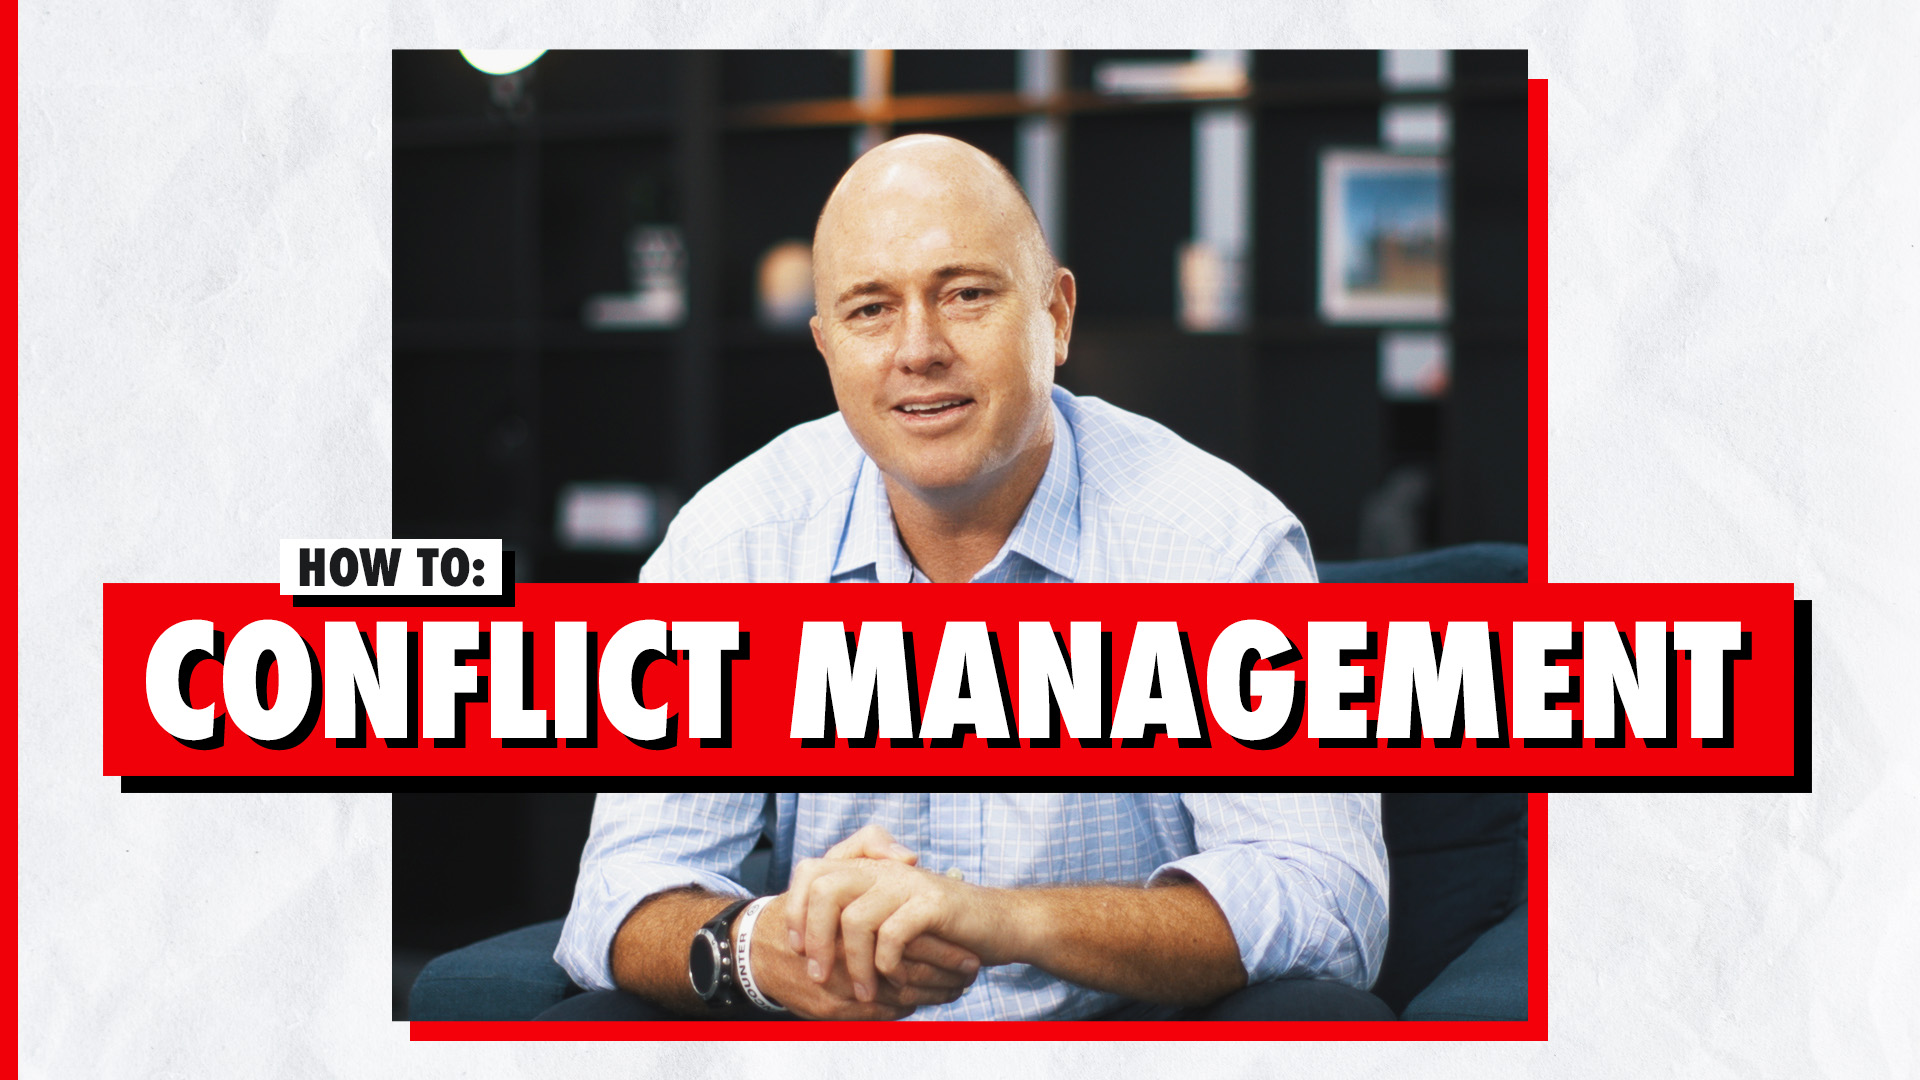 Trevor Ambrose Public Speaking Sales Training Conflict Management Thumbnail